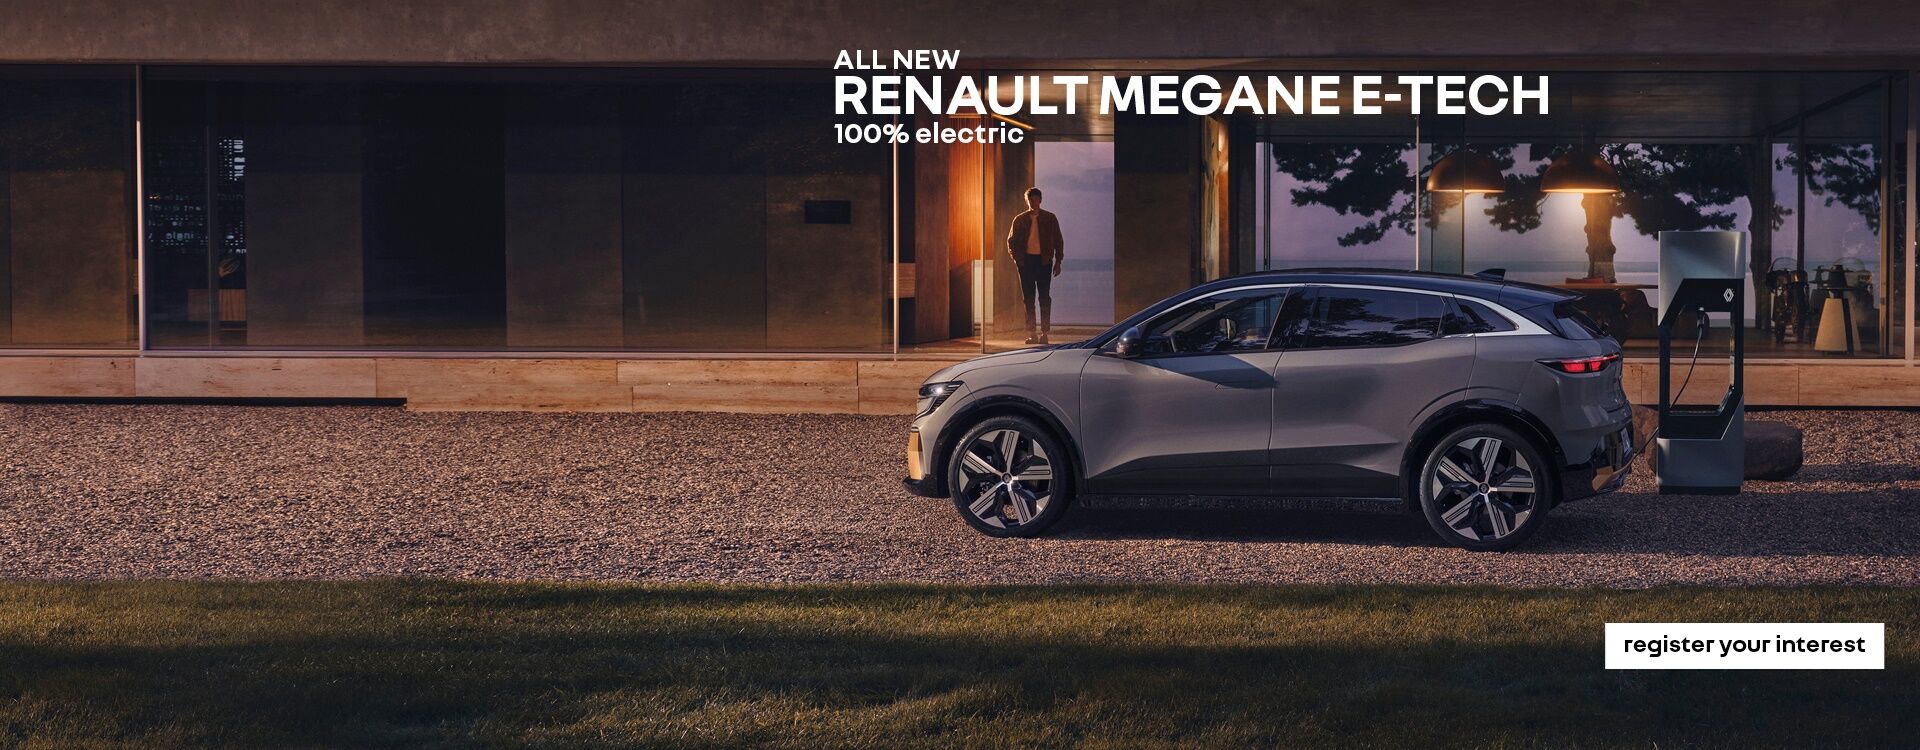 Renault Hero Image